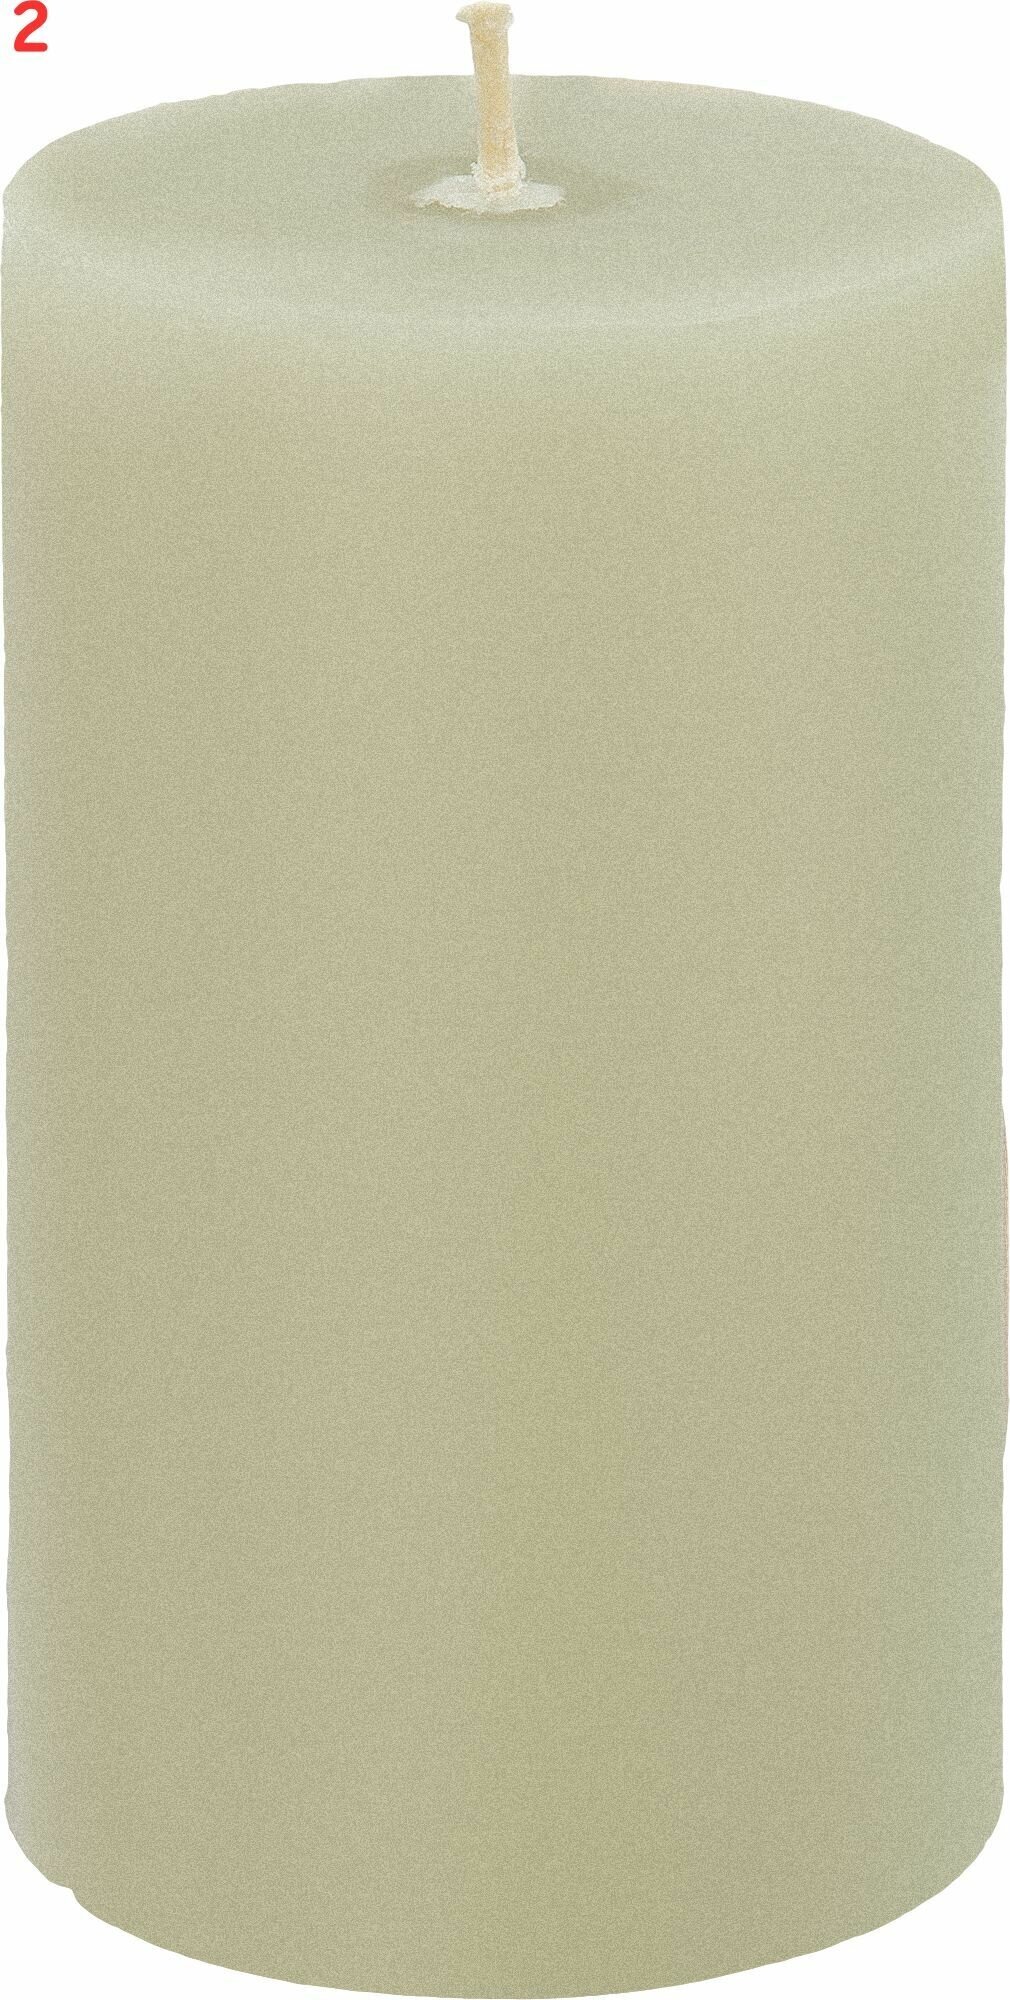 Свеча столбик Рустик светло-серая 11 см (2 шт.)